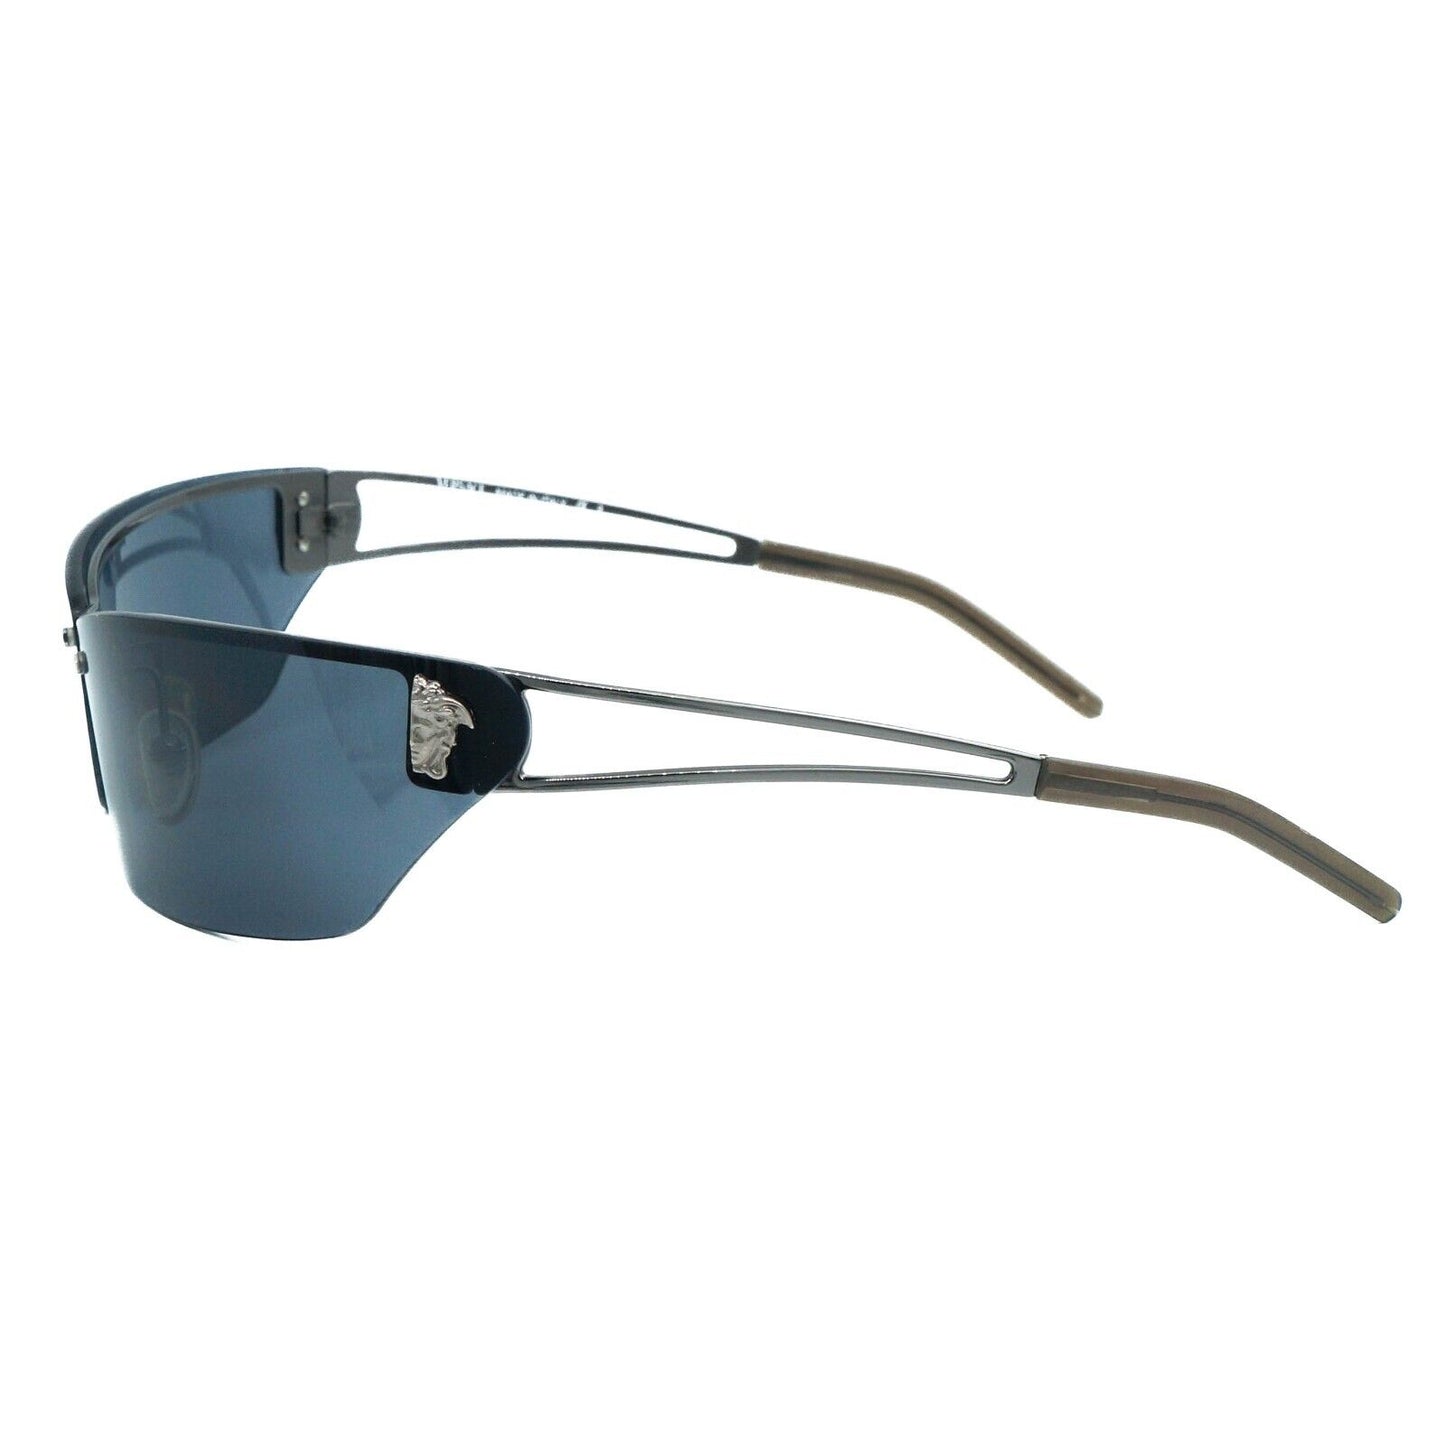 VERSACE N25 Blue Gray Sunglasses Vintage 00s